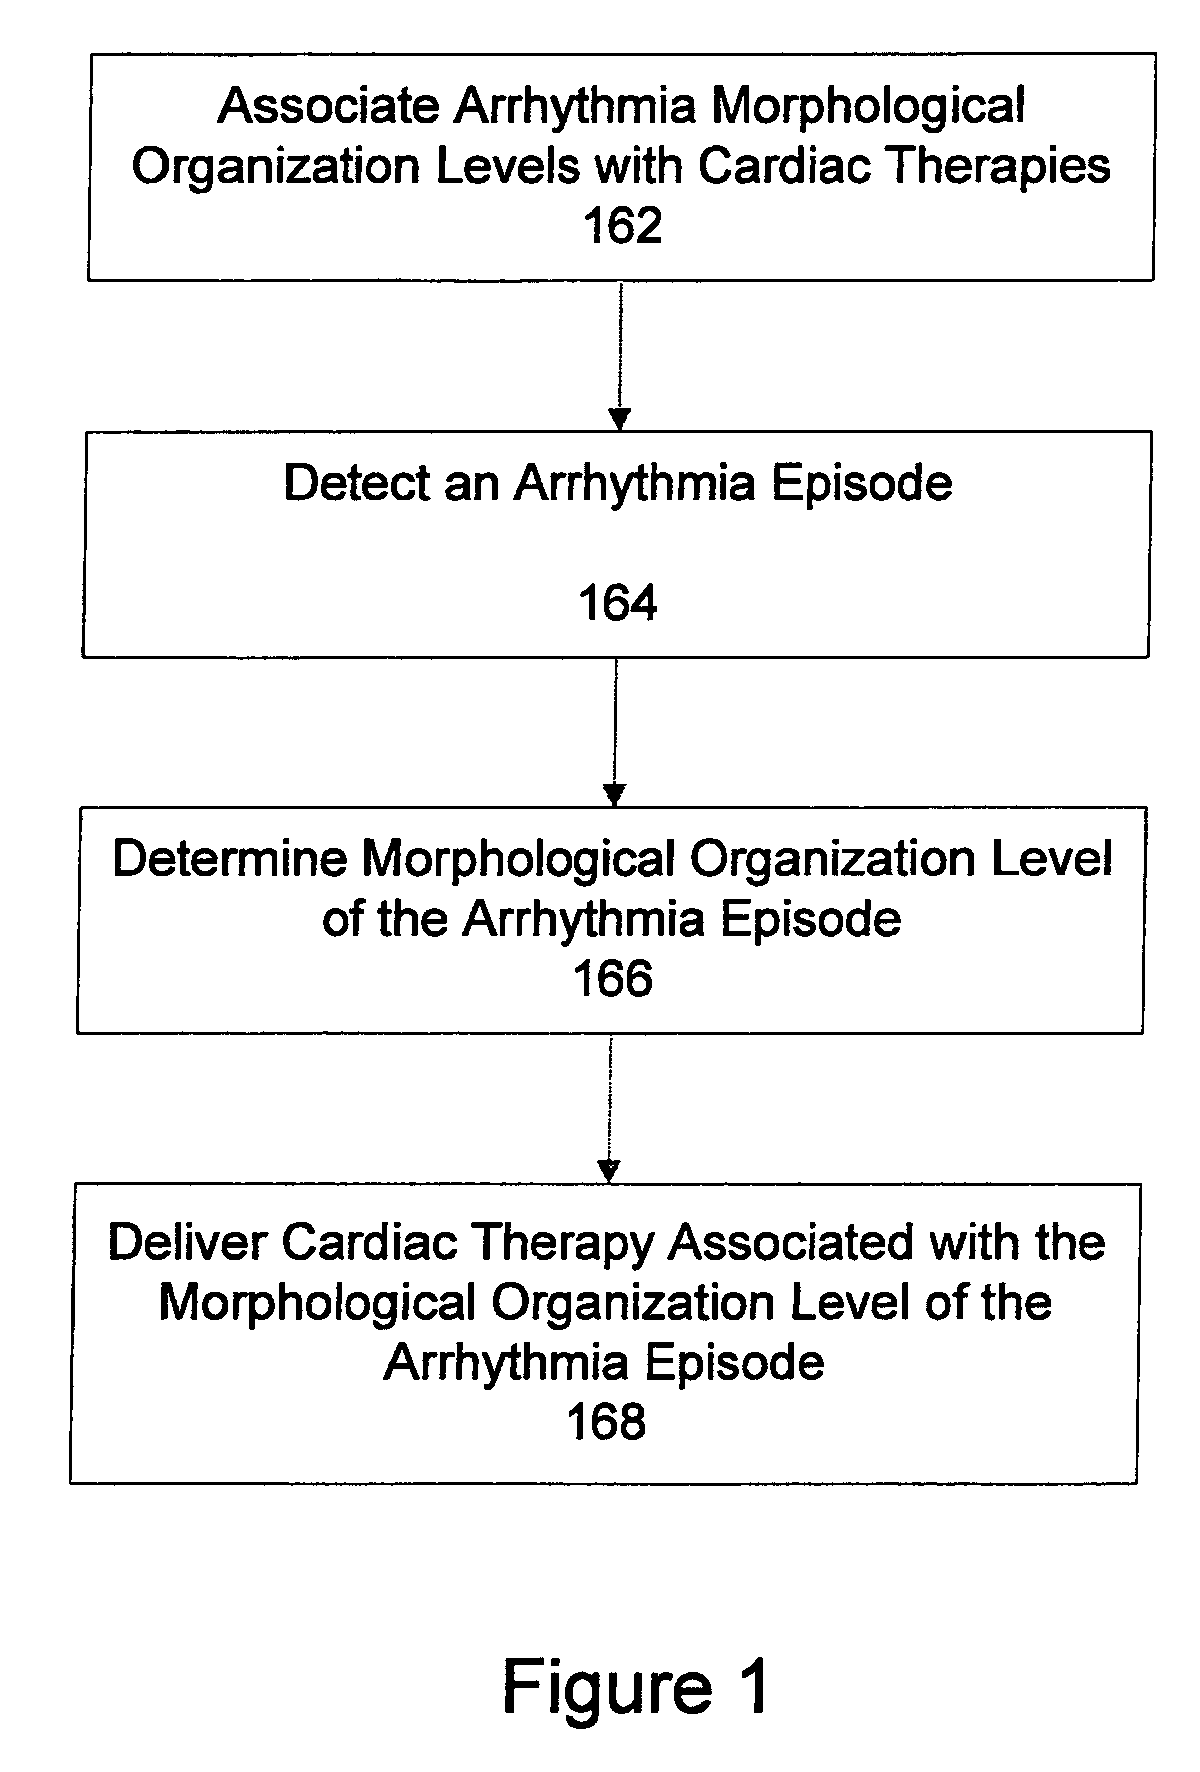 Automatic multi-level therapy based on morphologic organization of an arrhythmia